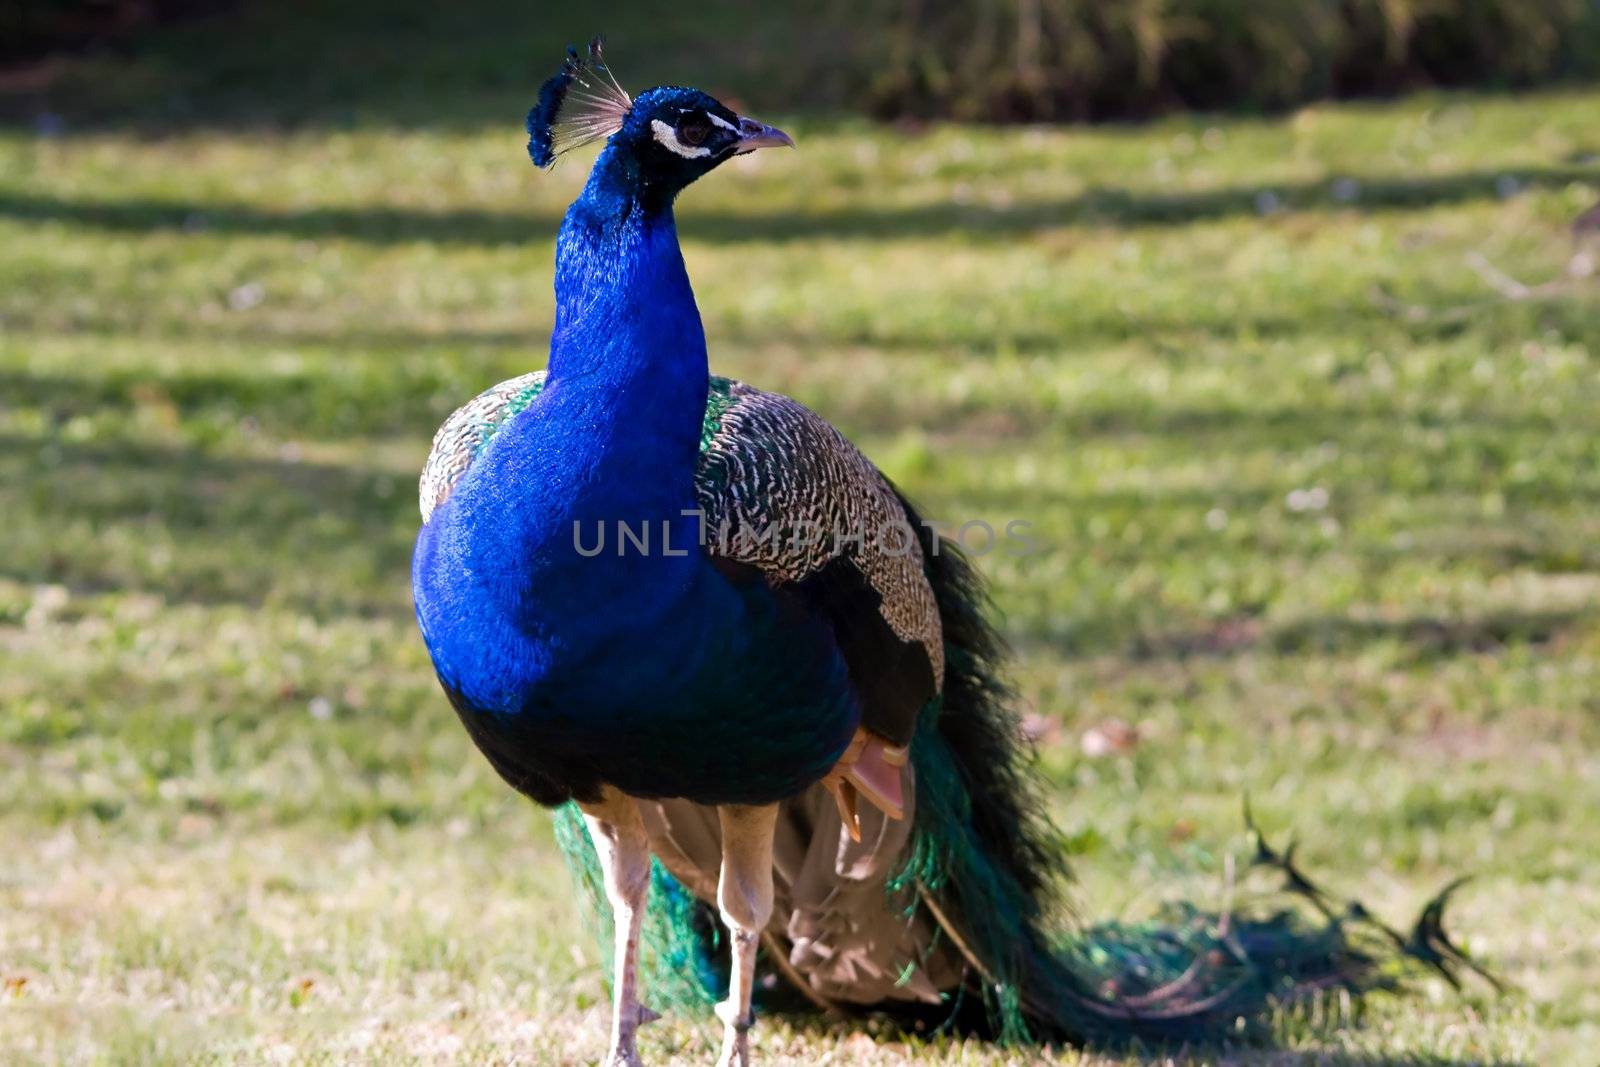 Peacock by PauloResende